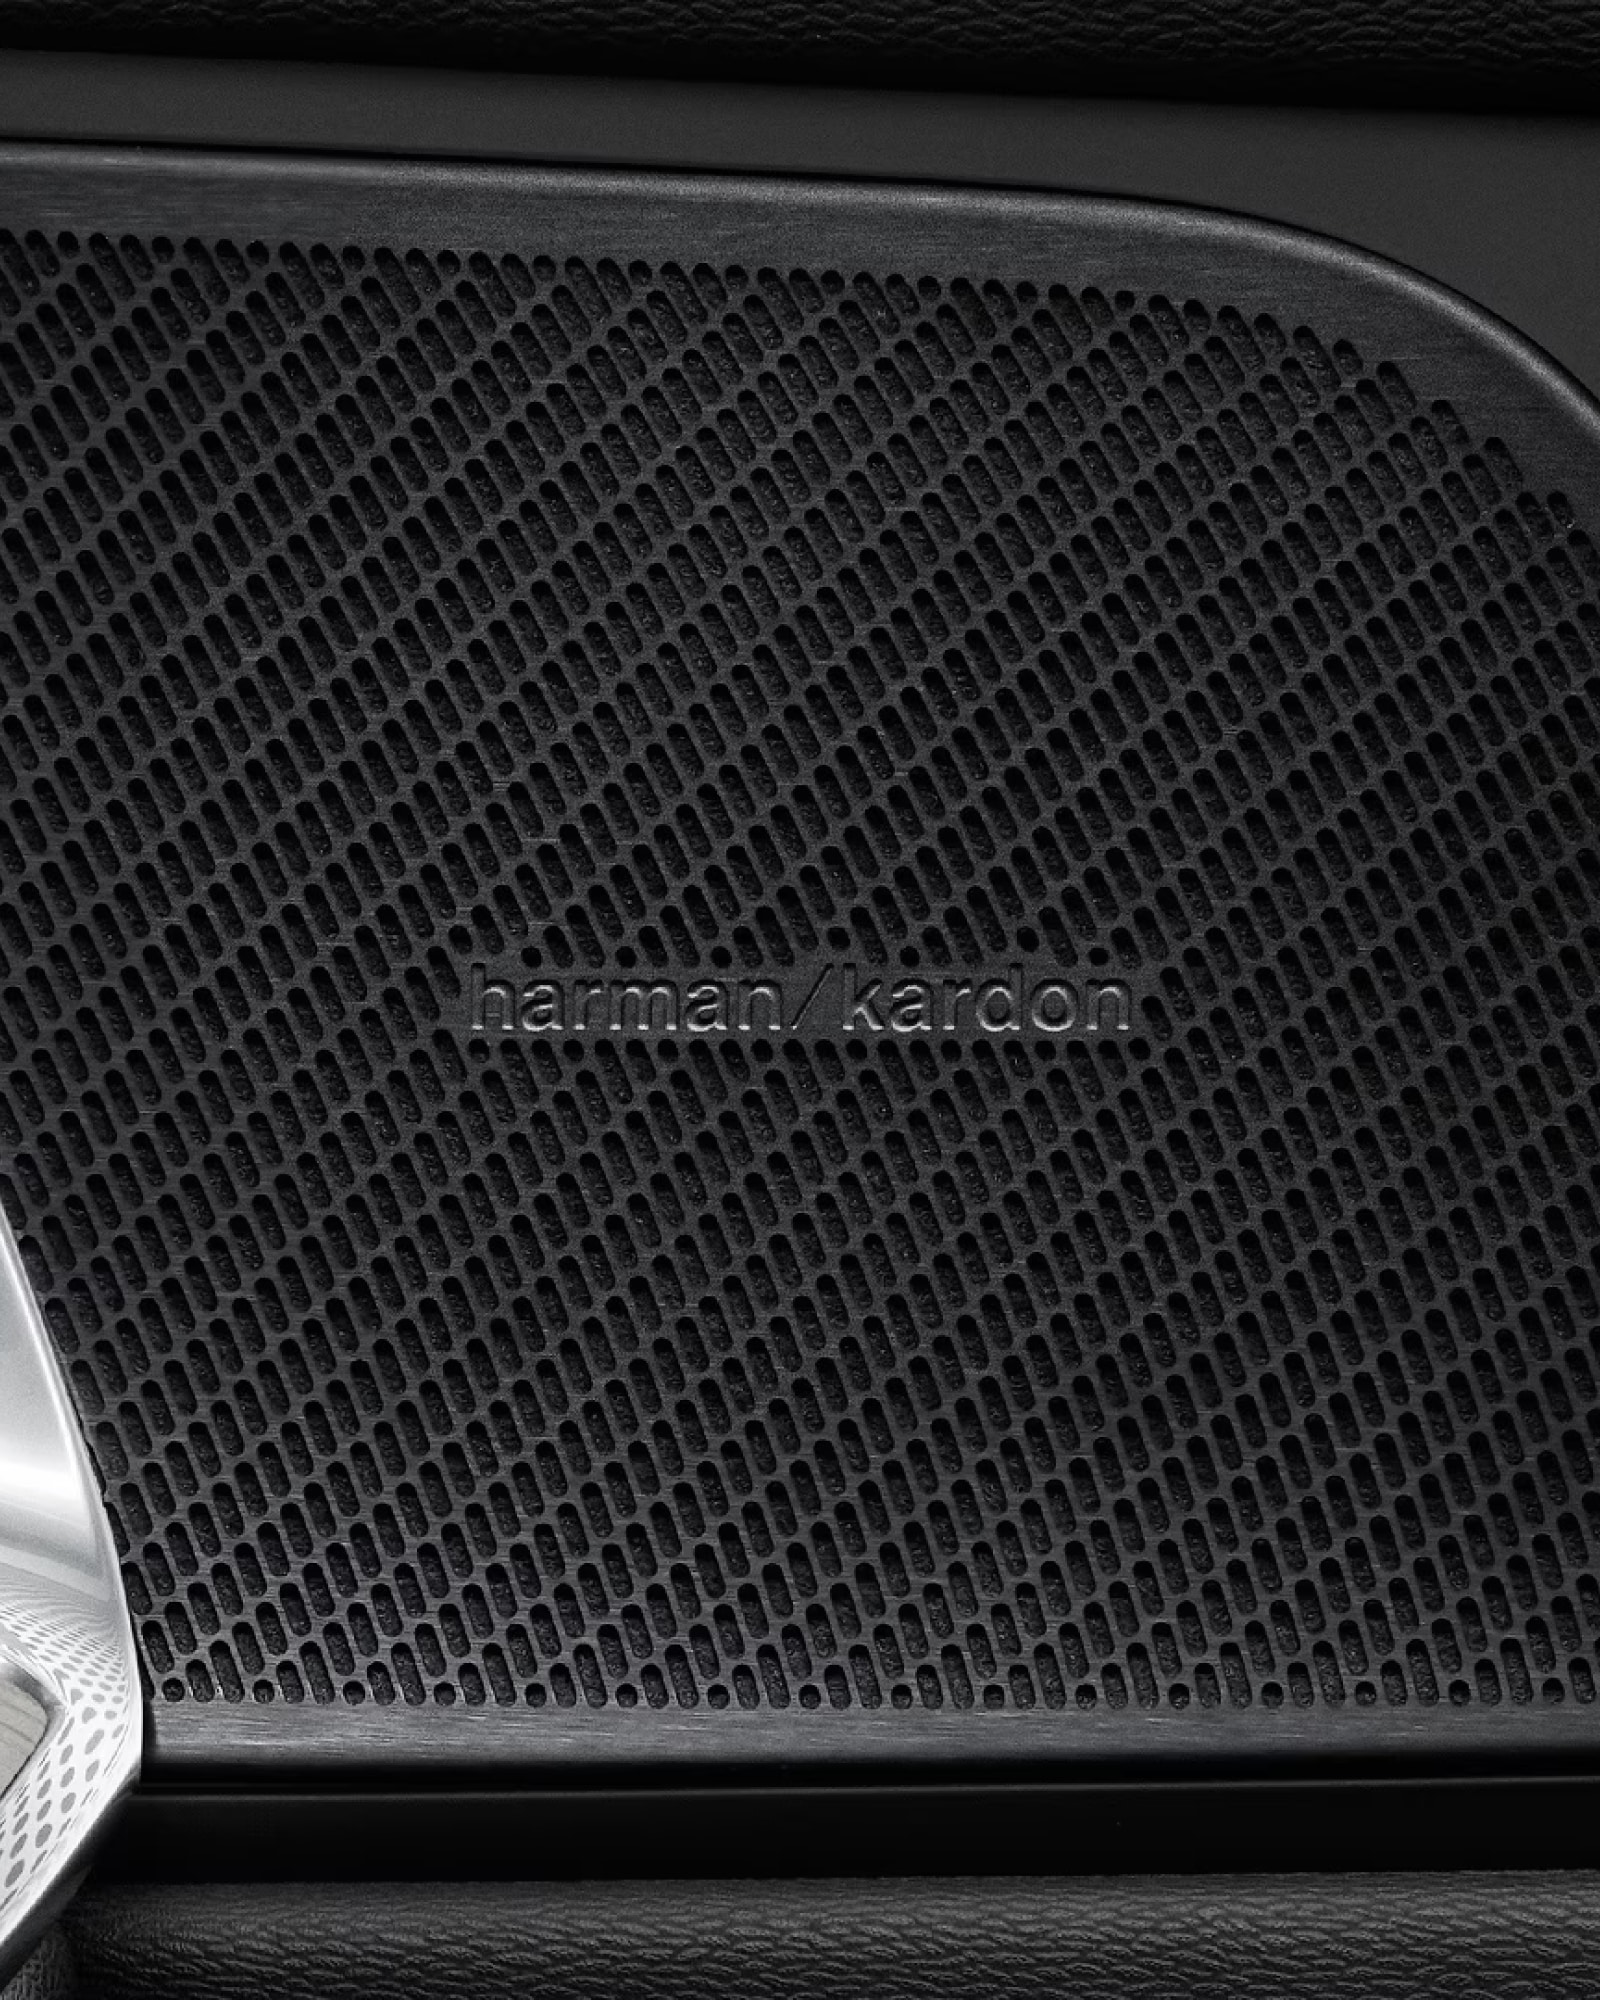 Harman Kardon speakers inside a Volvo XC60.